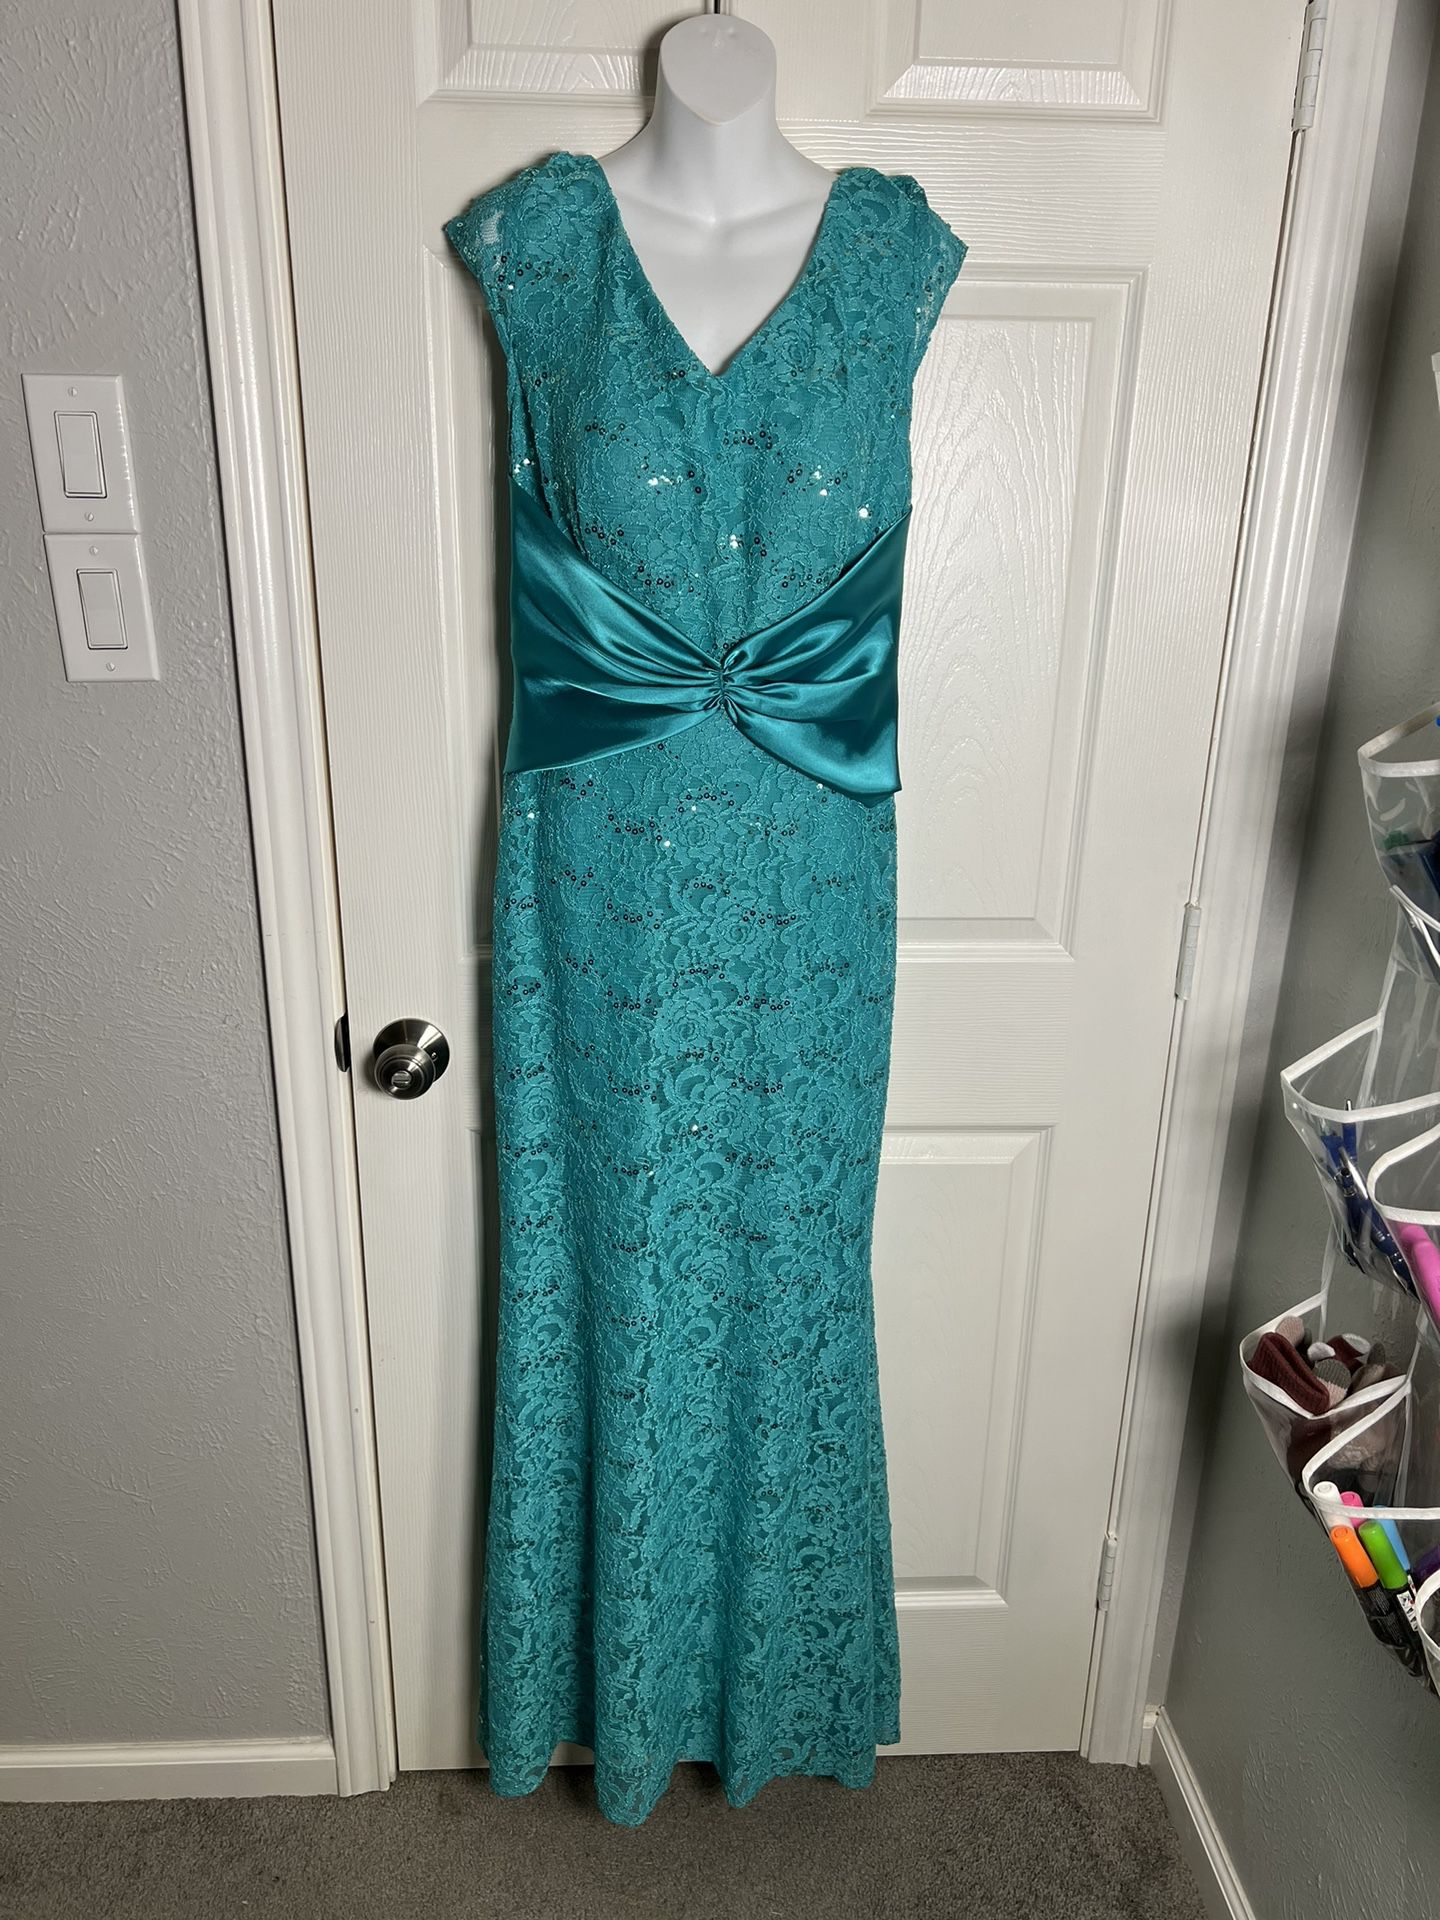 Turquoise & Sliver Sequined Full Length Dress